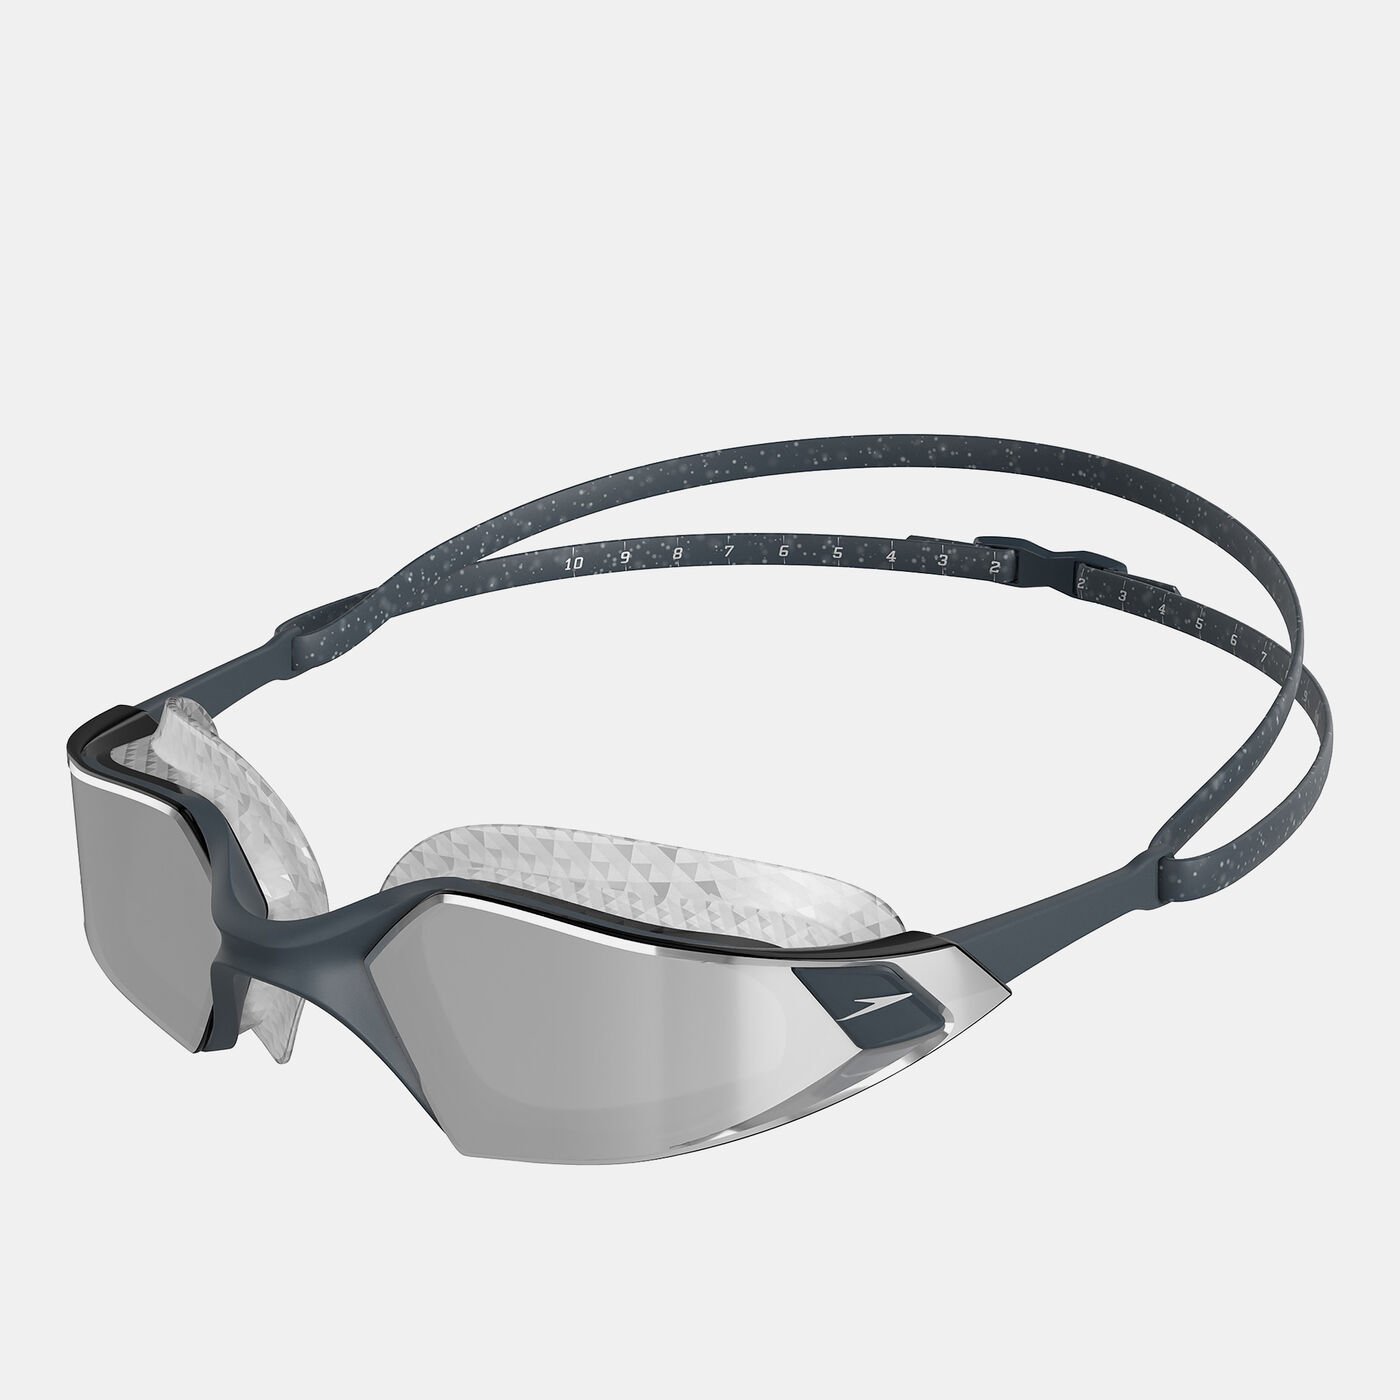 Aquapulse Pro Mirror Swimming Goggles